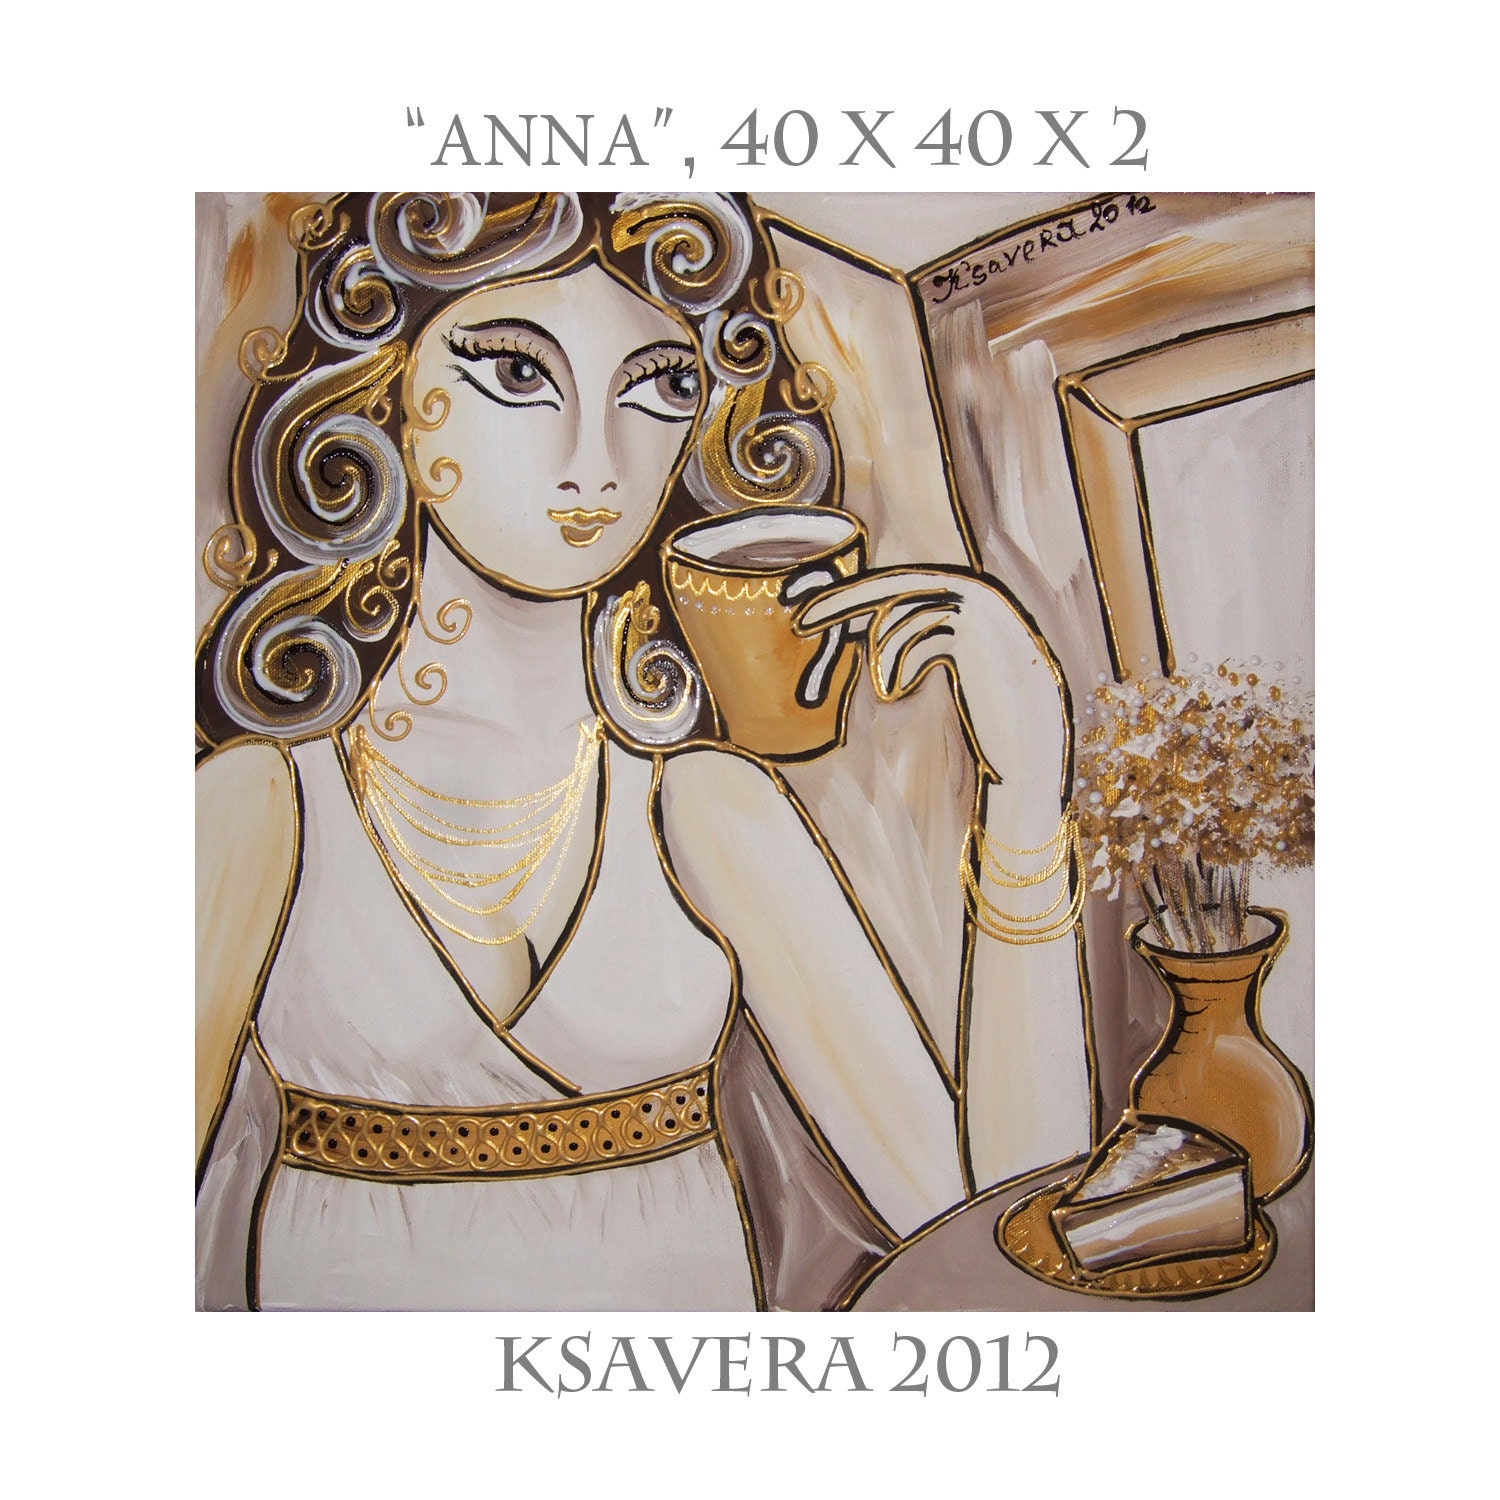 Portrait Painting of Woman Russian Impressionist Cubist art KSAVERA "ANNA" 16x16 Original Lady Girl Cubism Contemporary beige gold brown - KsaveraART